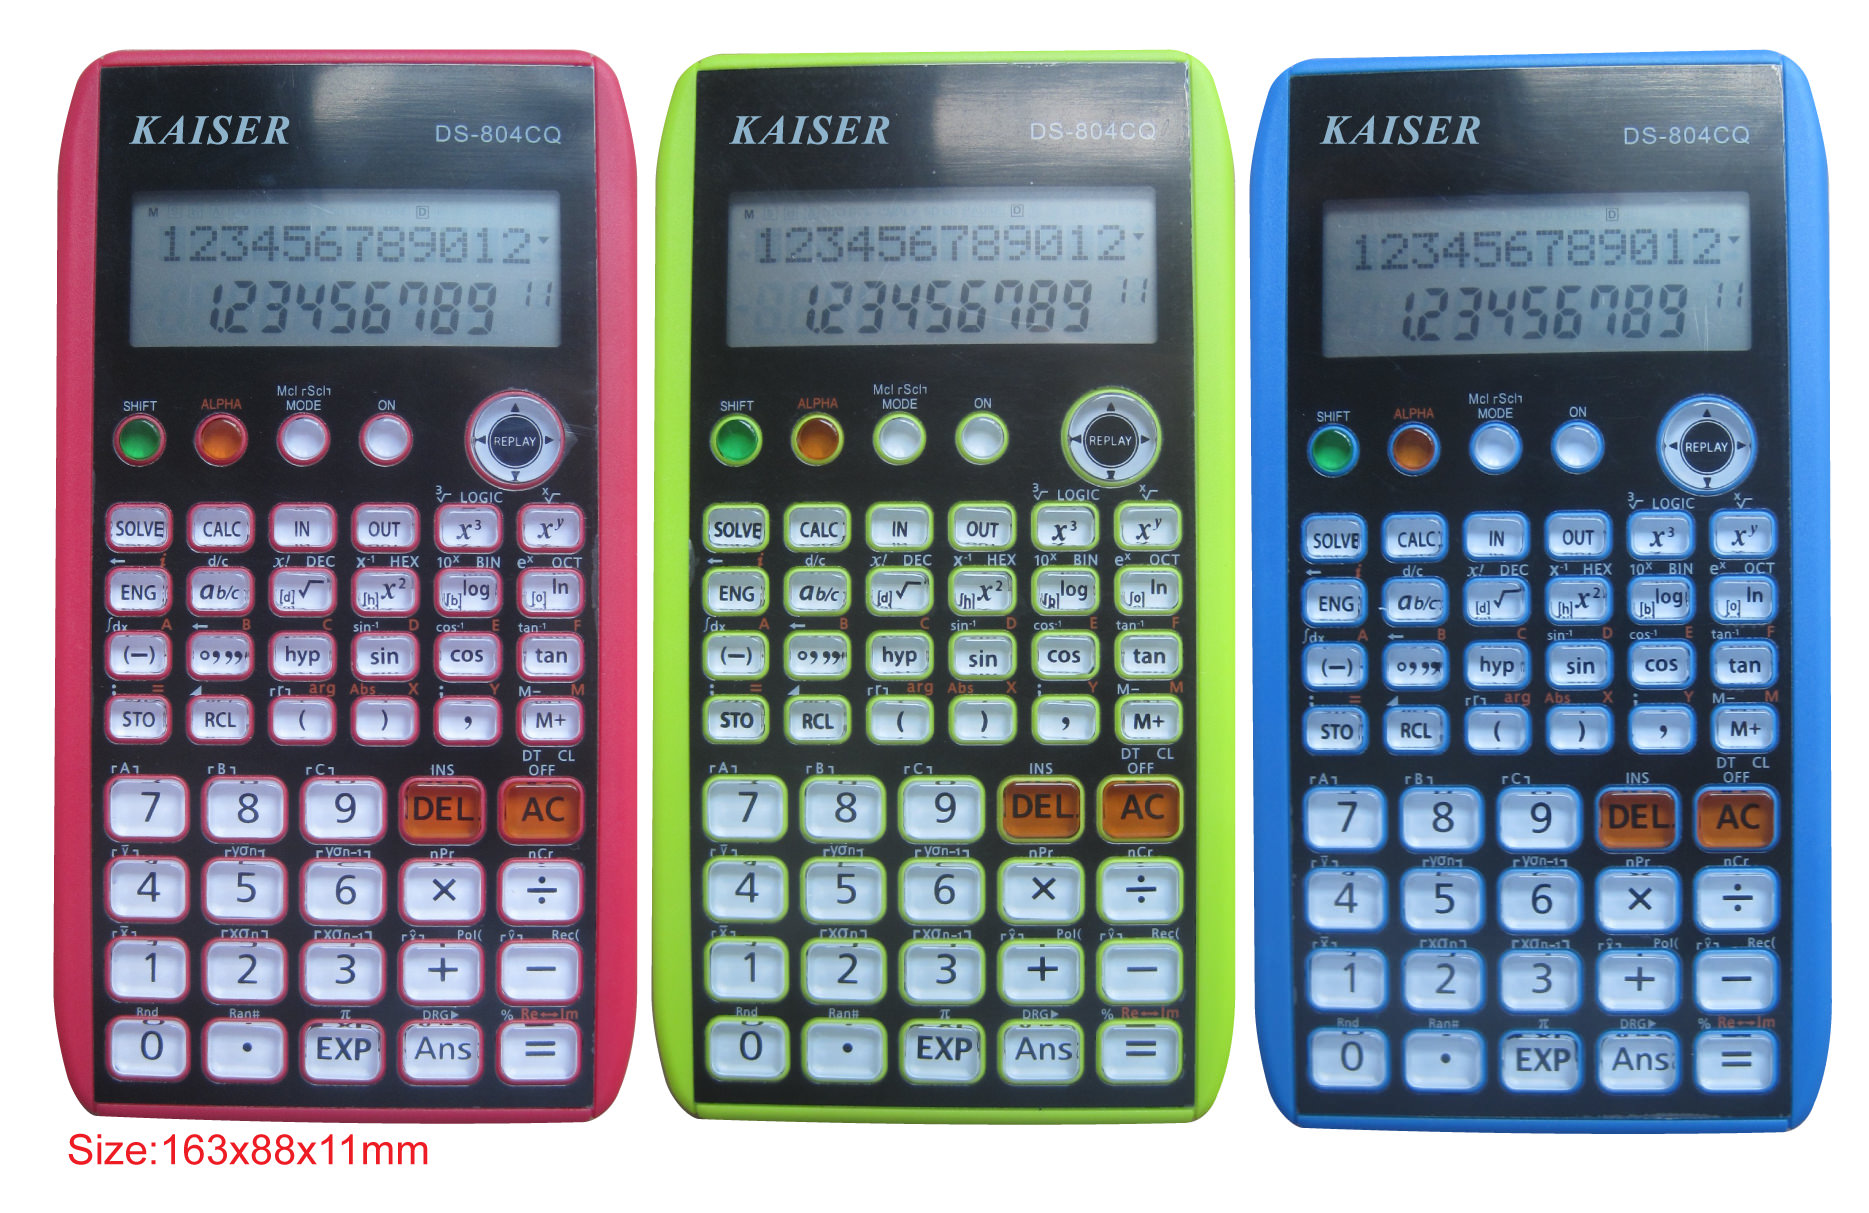  2-line 10+2 digit 283 functions scientific calculator